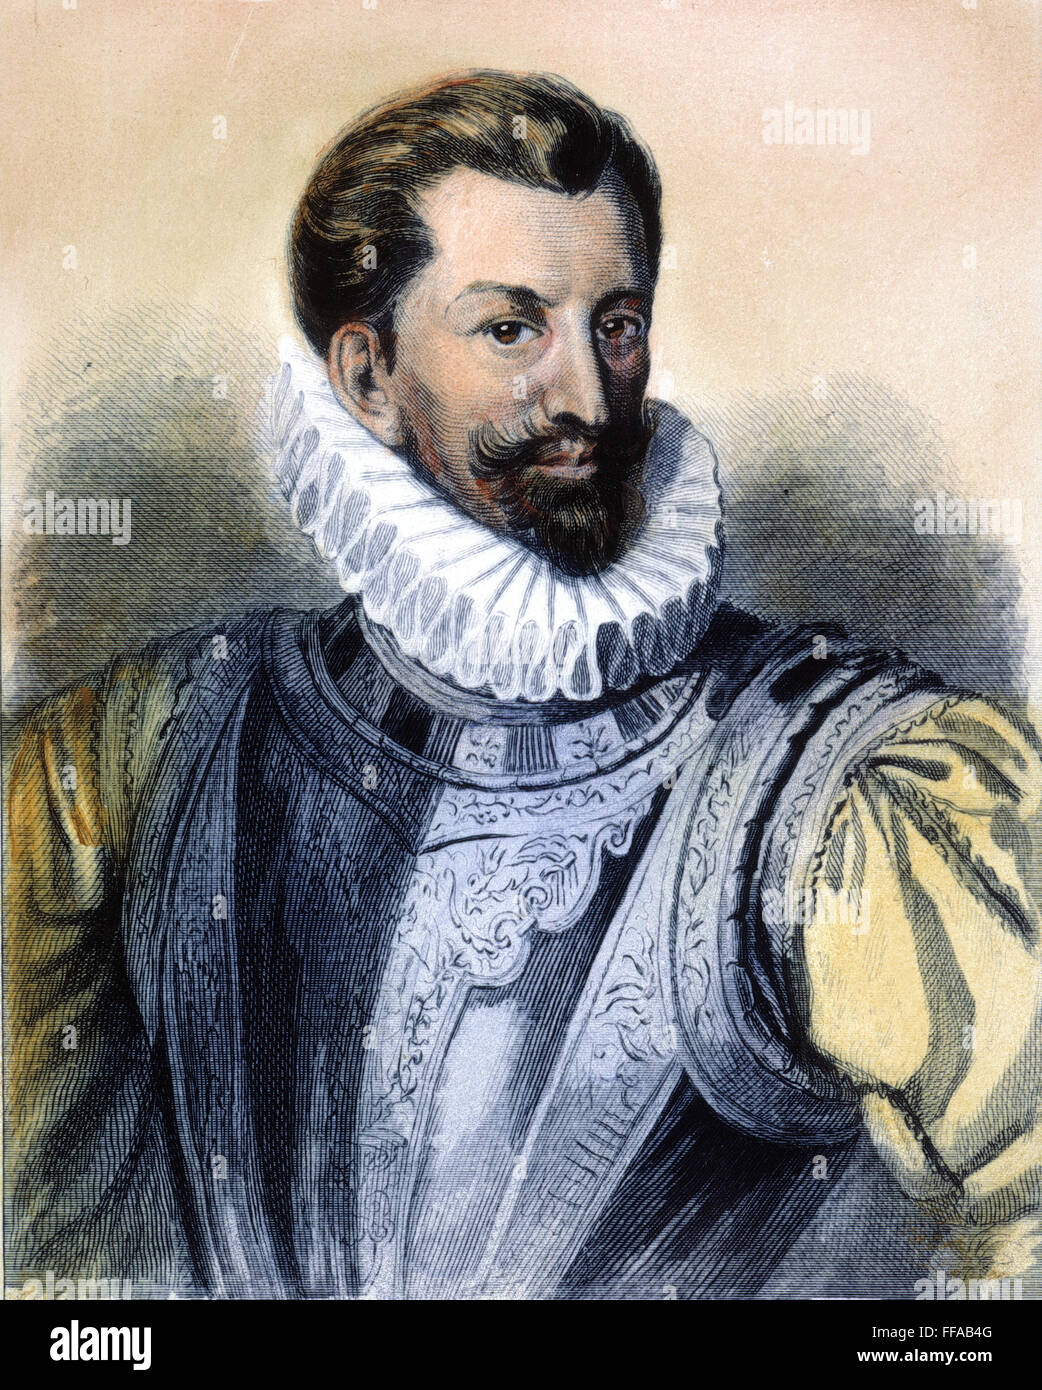 DUC DE GUISE, HENRY ich /nof Lothringen. 3. Duc de Guise, bekannt als "le BalafrΘ", die Narben (1550-1588). Stahl, Gravur, Französisch, 19./Ncentury. Stockfoto